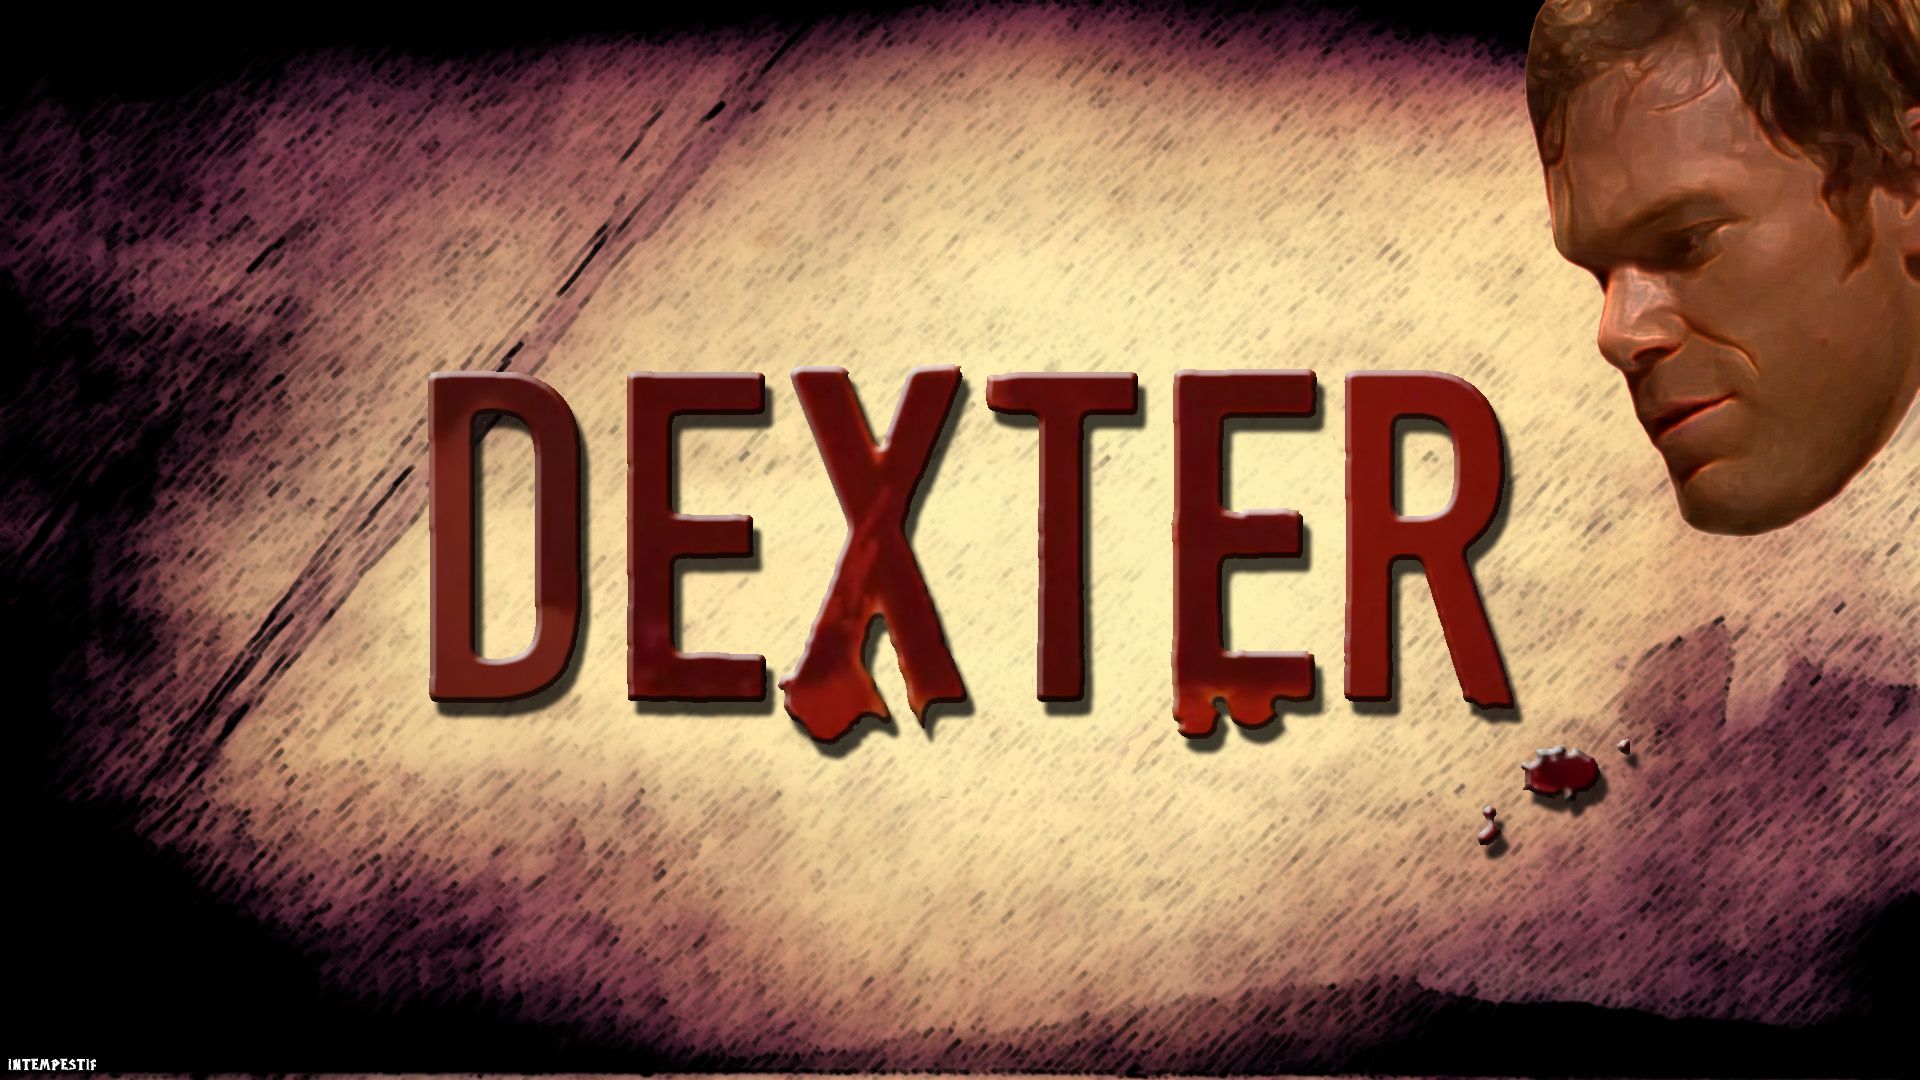 Dexter Image Wallpaper HD